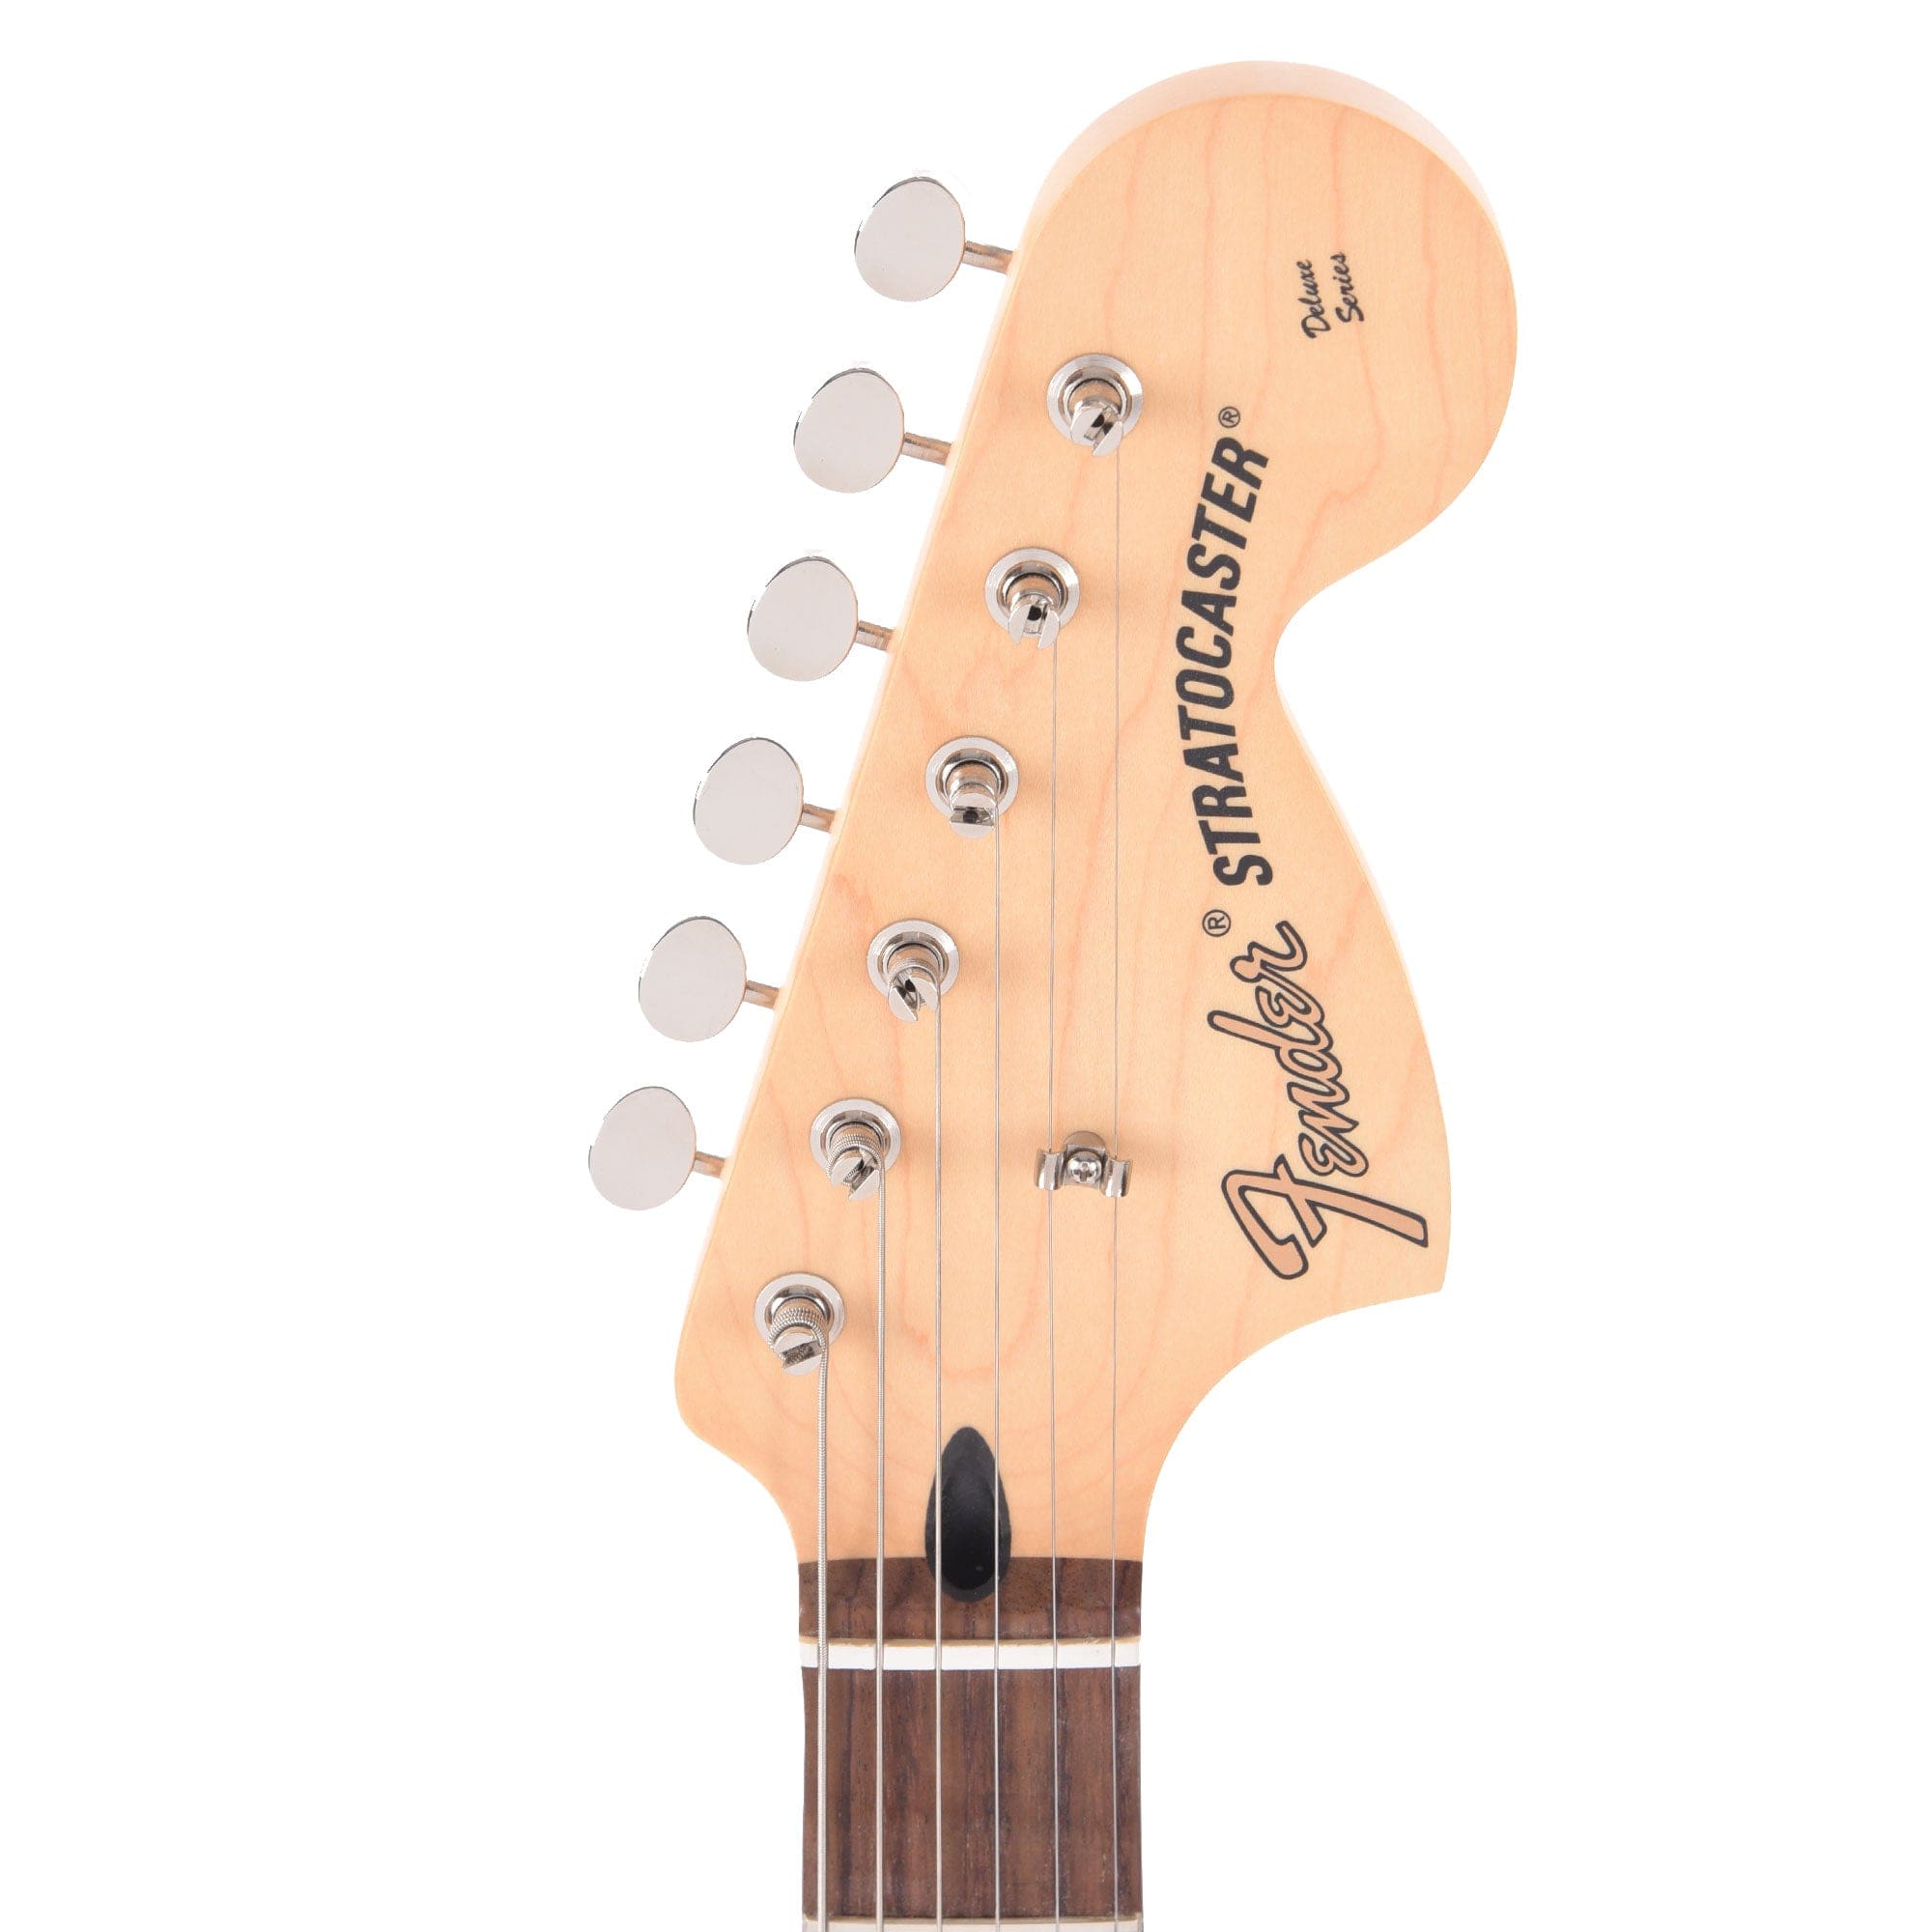 Fender Artist Limited Edition Tom DeLonge Stratocaster Surf Green Electric Guitars / Solid Body